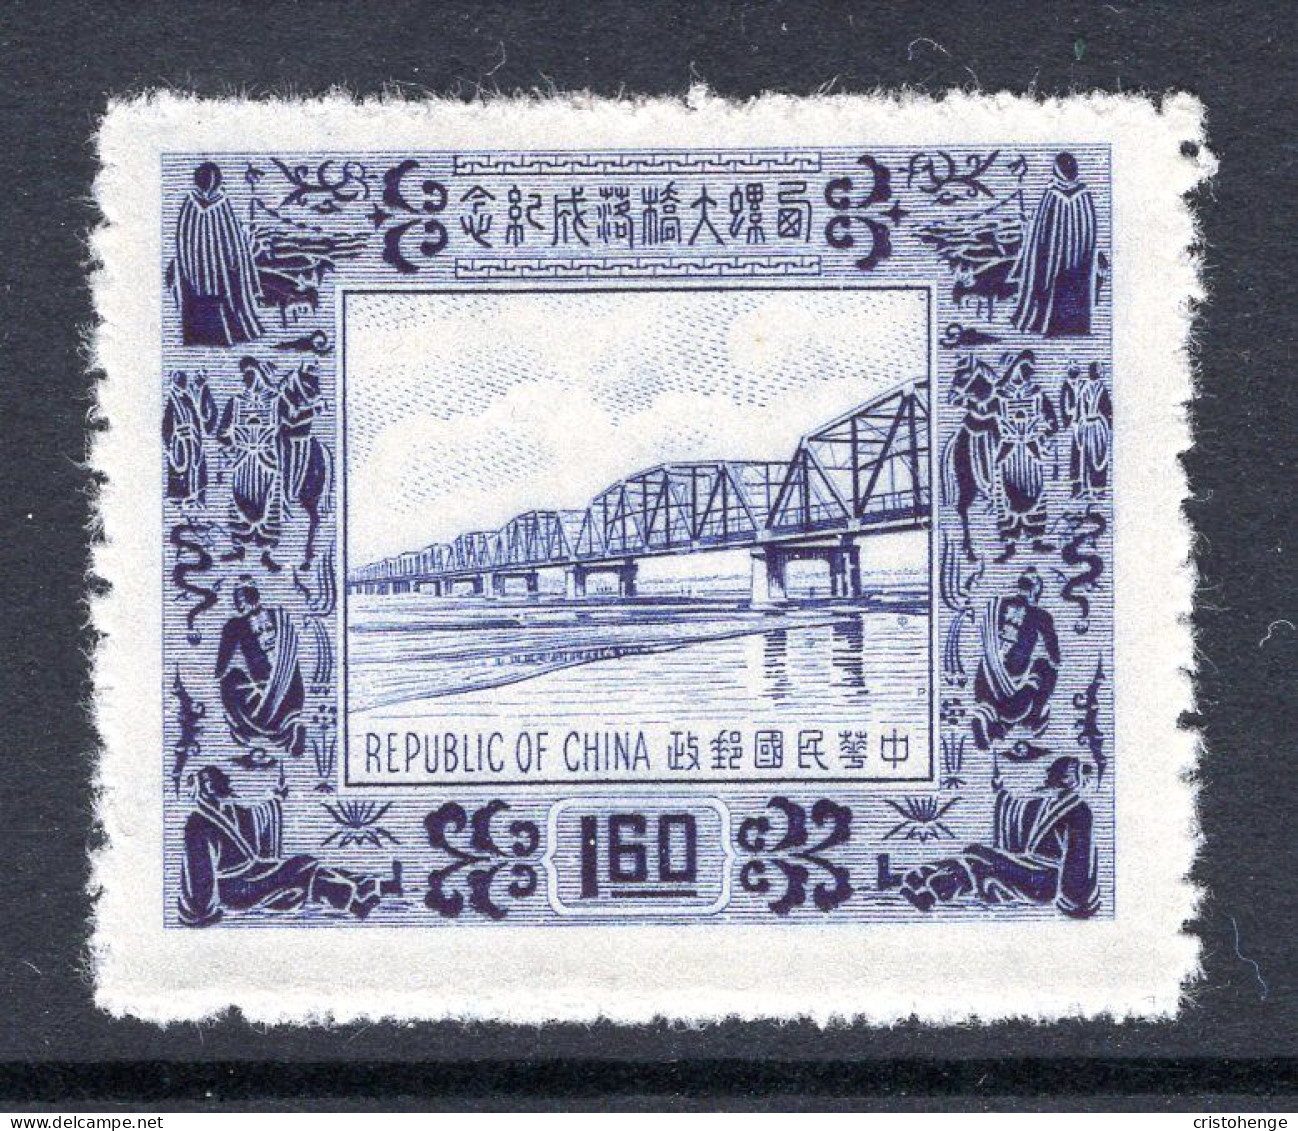 Taiwan 1954 Completion Of Silo Bridge - $1.60 Deep Ultramarine VLHM (SG 181) - Unused Stamps